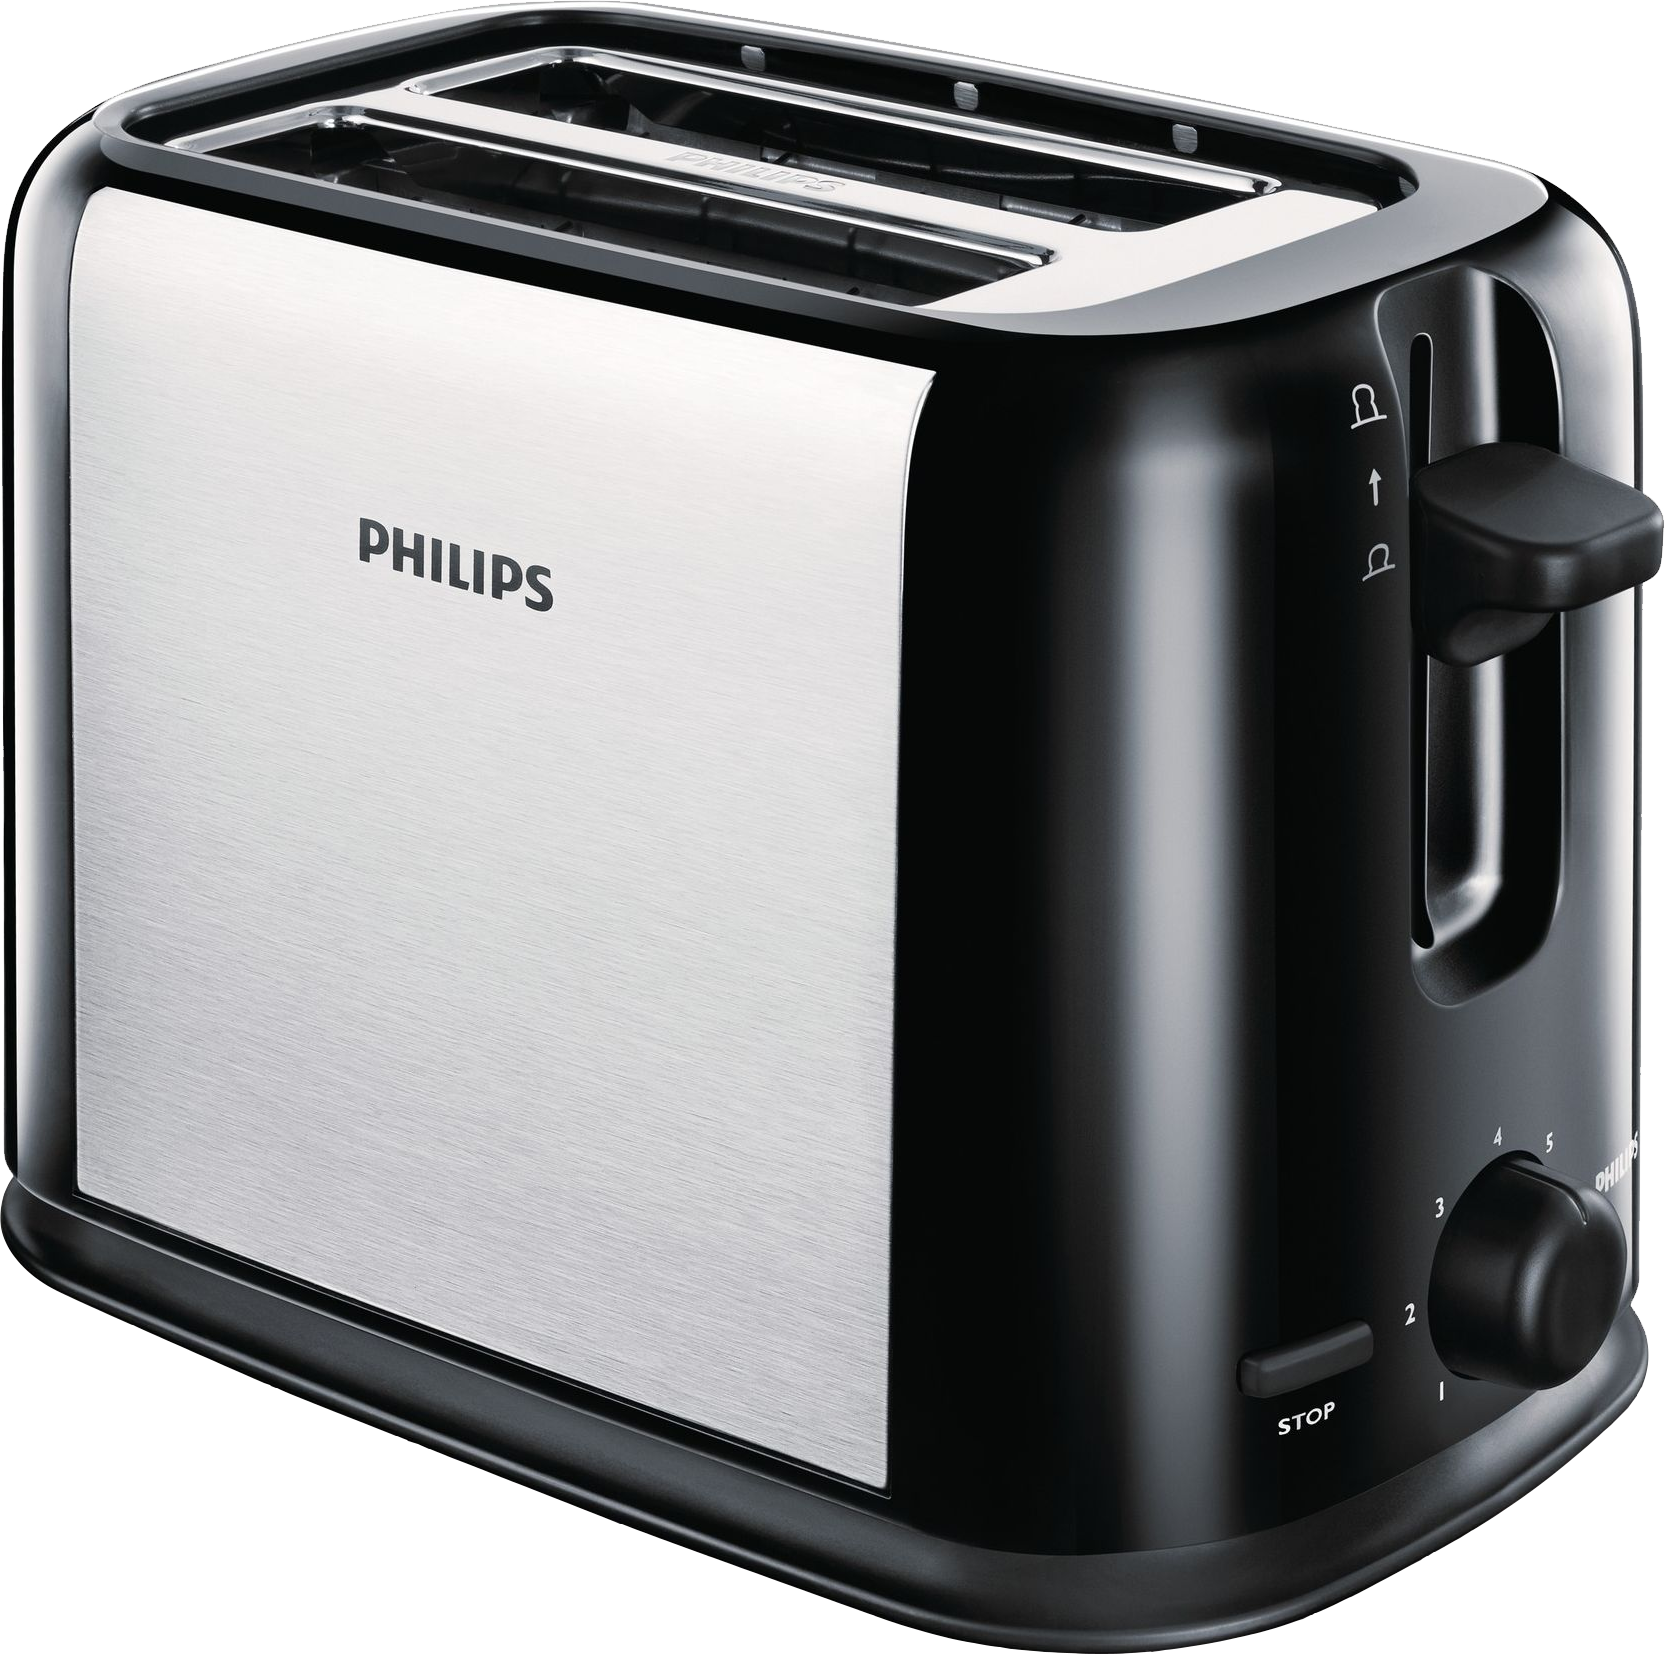 Тостеры philips купить. Тостер Филипс 2586. Philips Daily collection hd2586/20. Тостер Филипс черный.